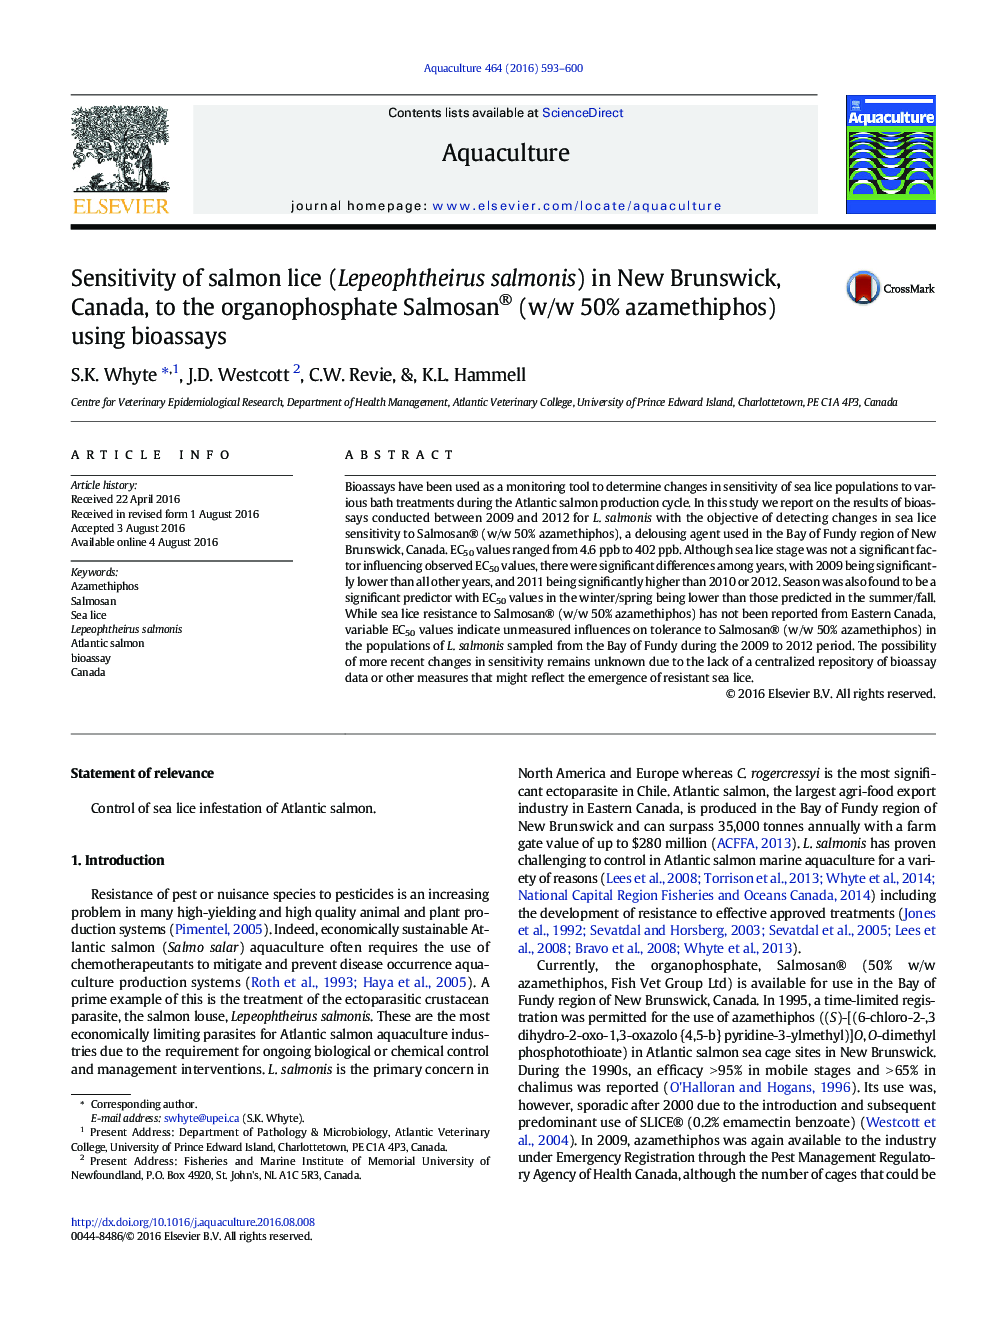 Sensitivity of salmon lice (Lepeophtheirus salmonis) in New Brunswick, Canada, to the organophosphate Salmosan® (w/w 50% azamethiphos) using bioassays